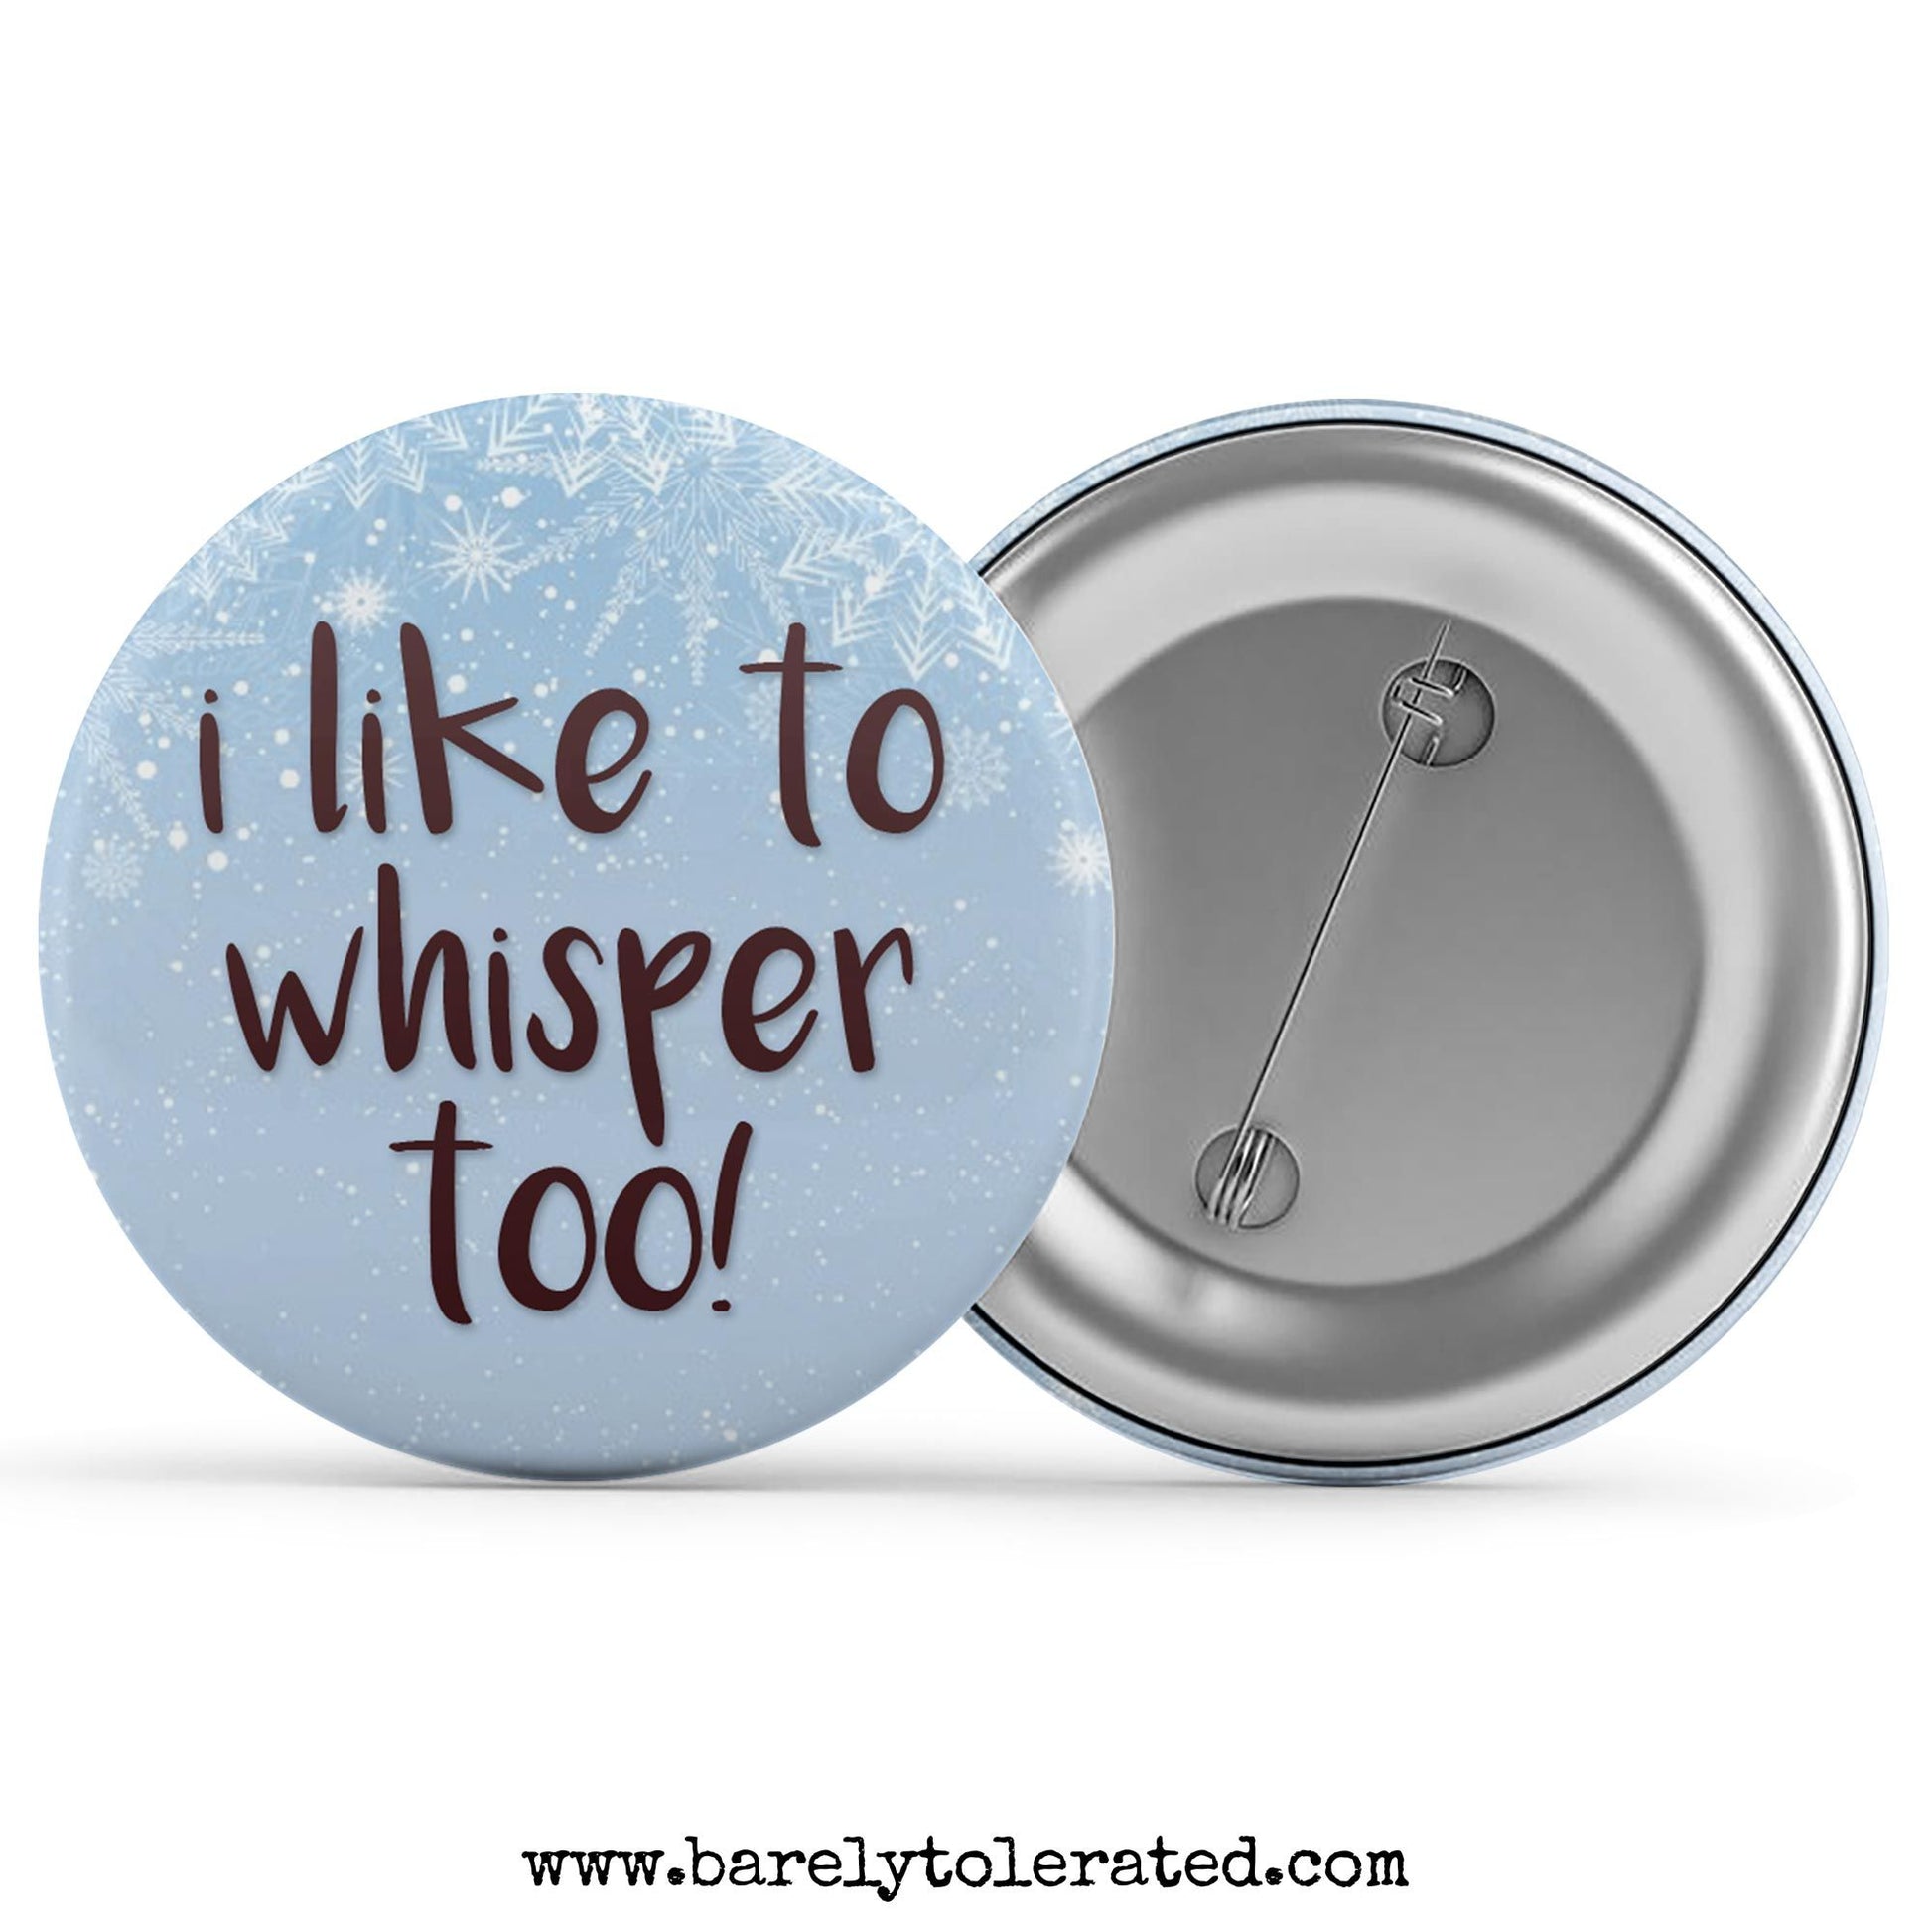 I Like To Whisper Too! Image